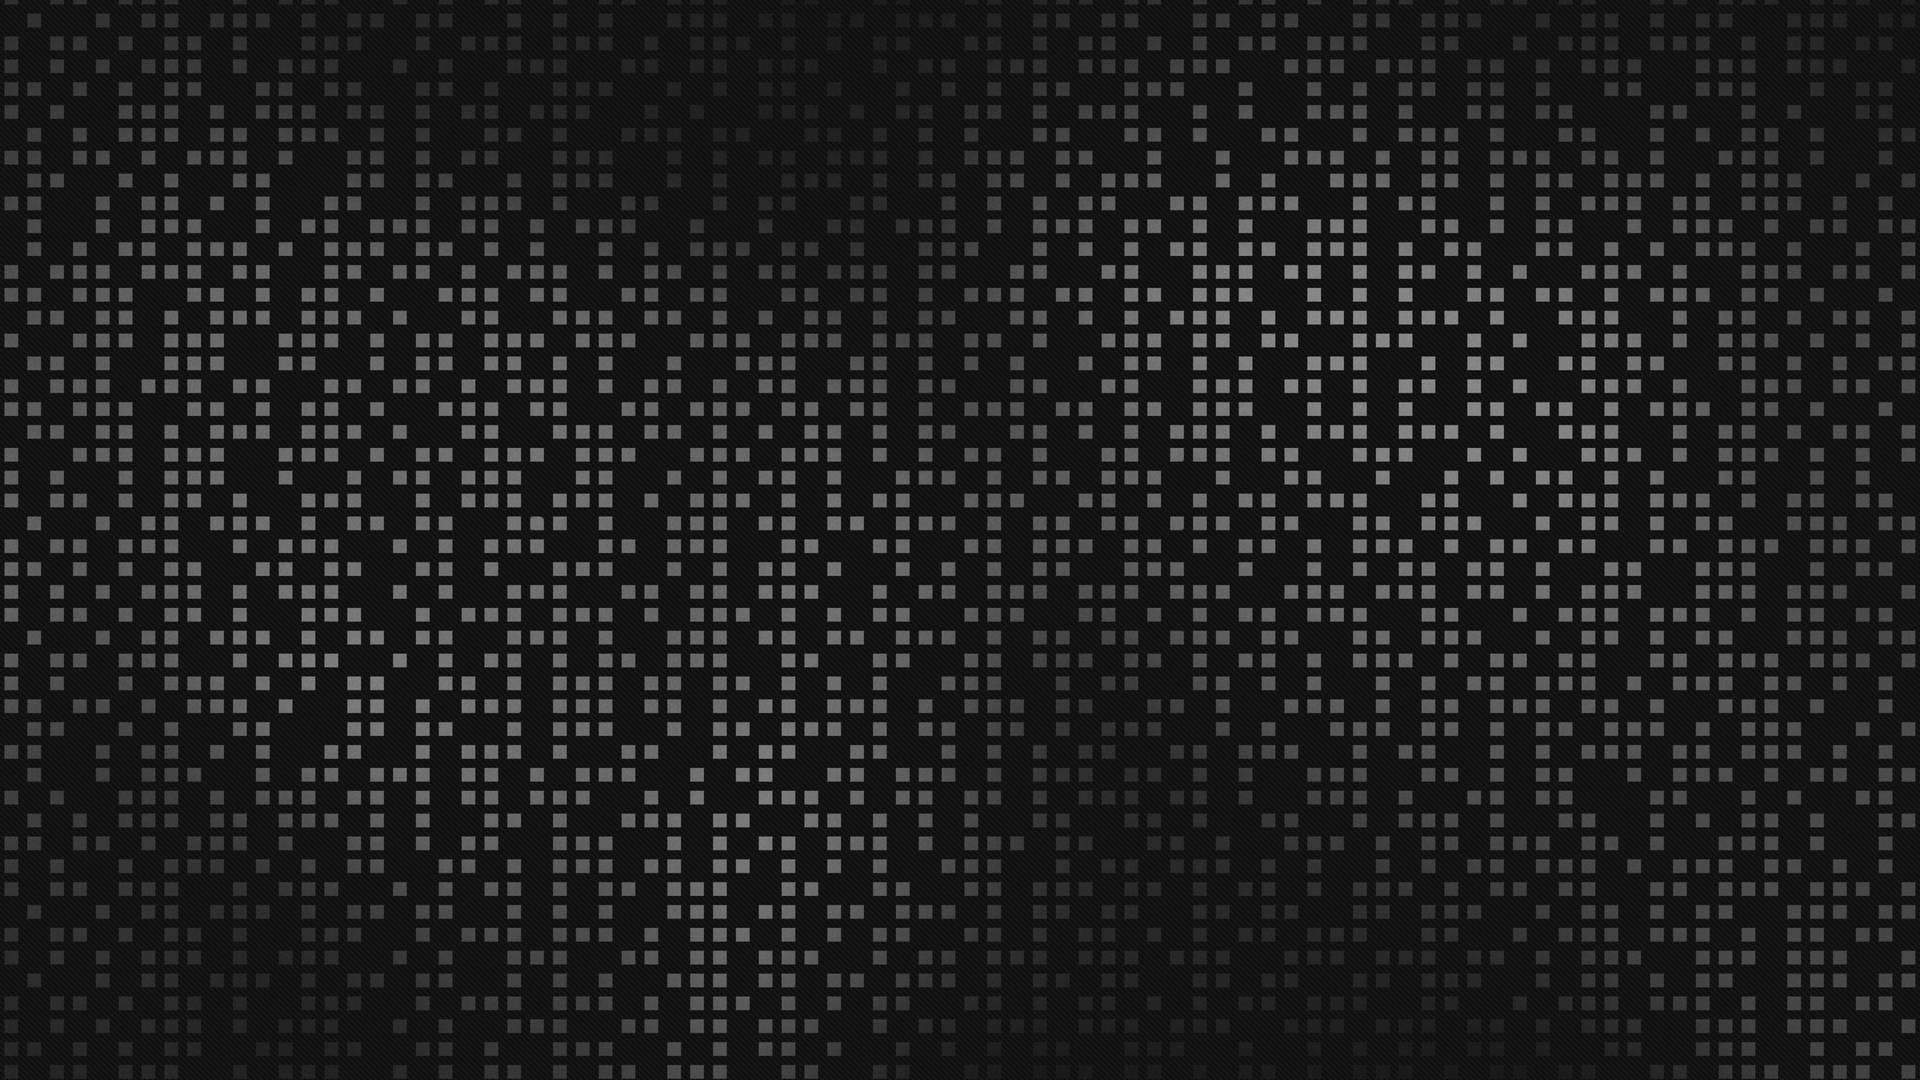 Exquisite Black Geometric Dots Design In 4k Ultra Hd Background